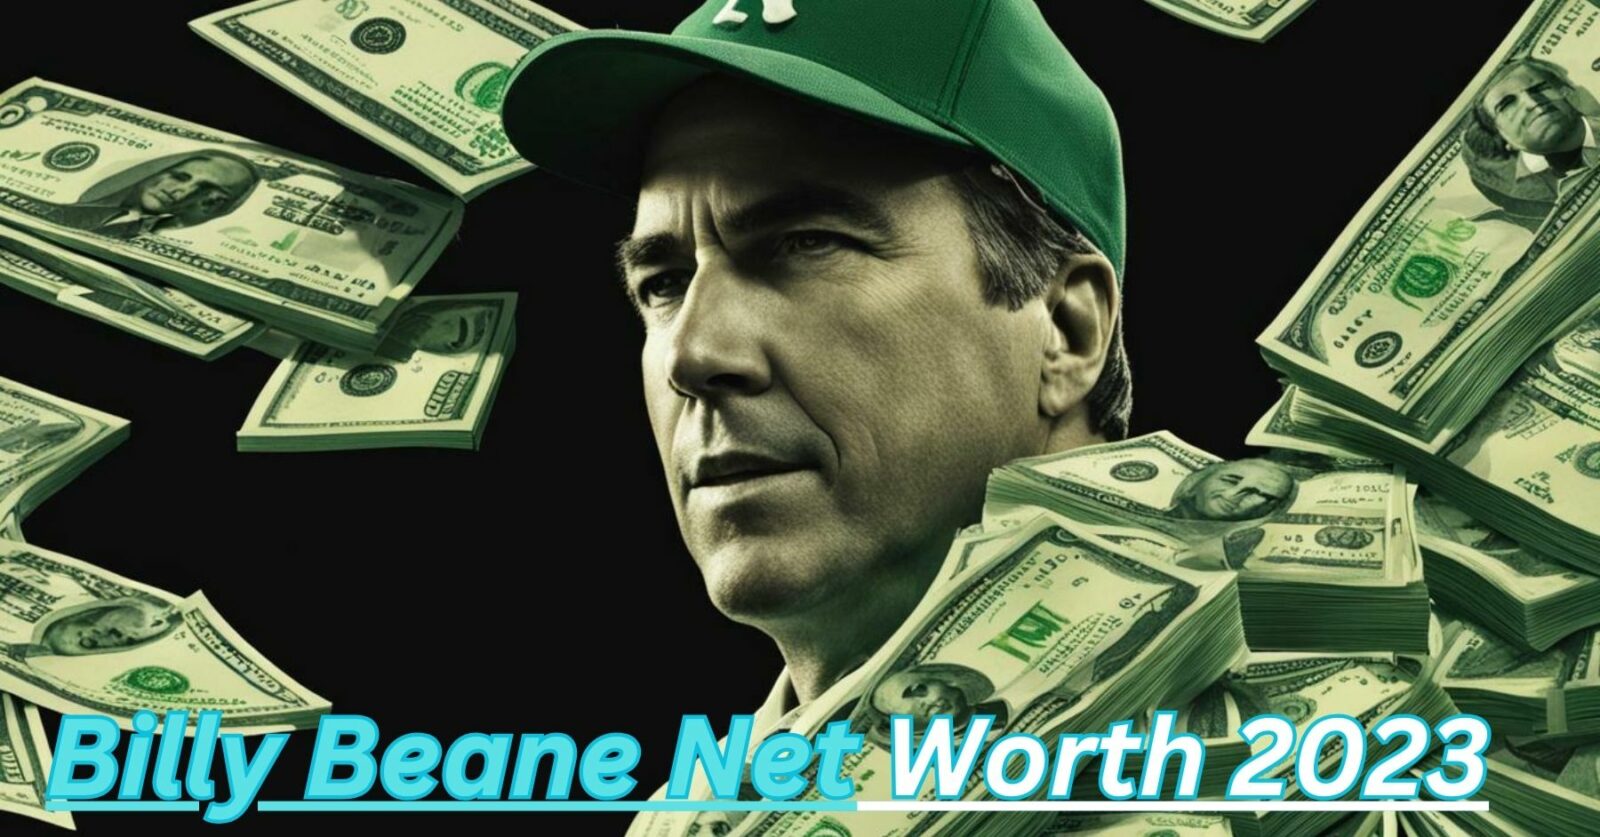 Billy Beane Net Worth 2023